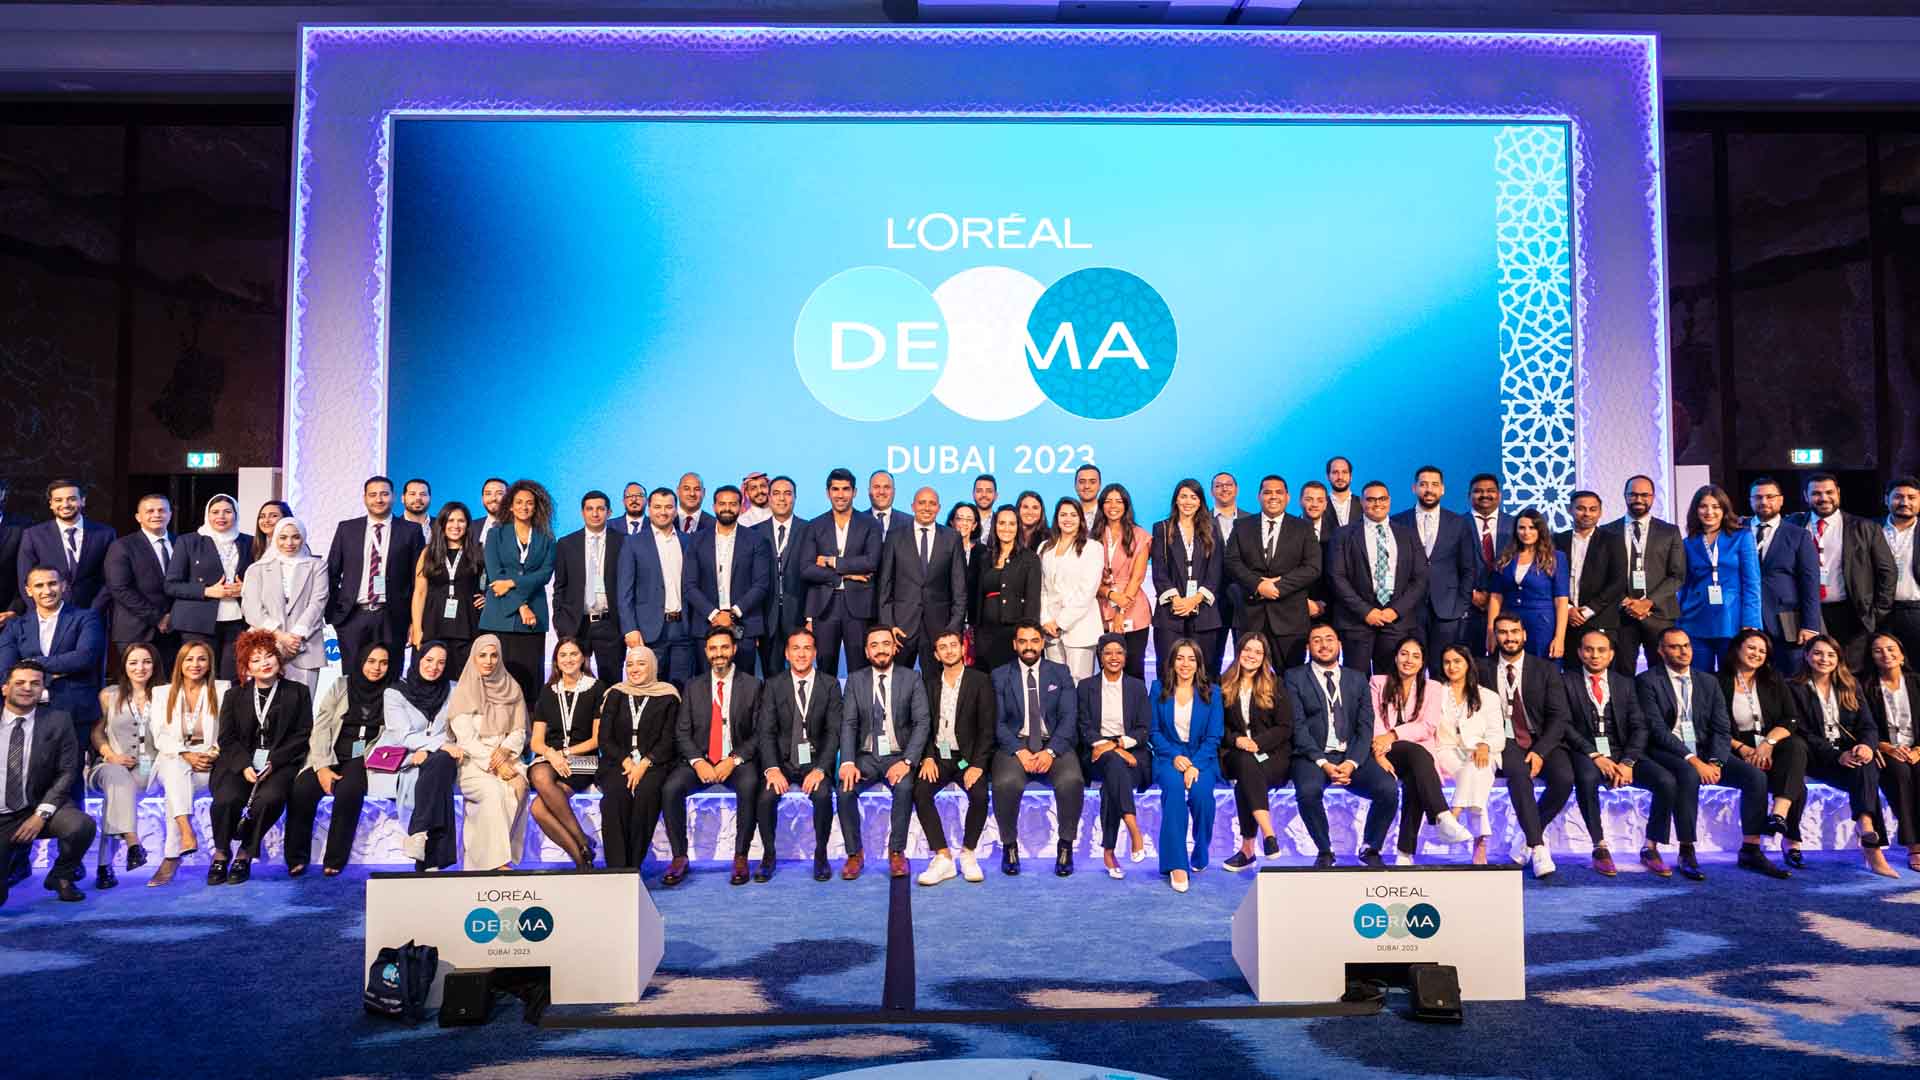 L’Oréal Derma Celebrated its 4th Edition in Dubai UAE